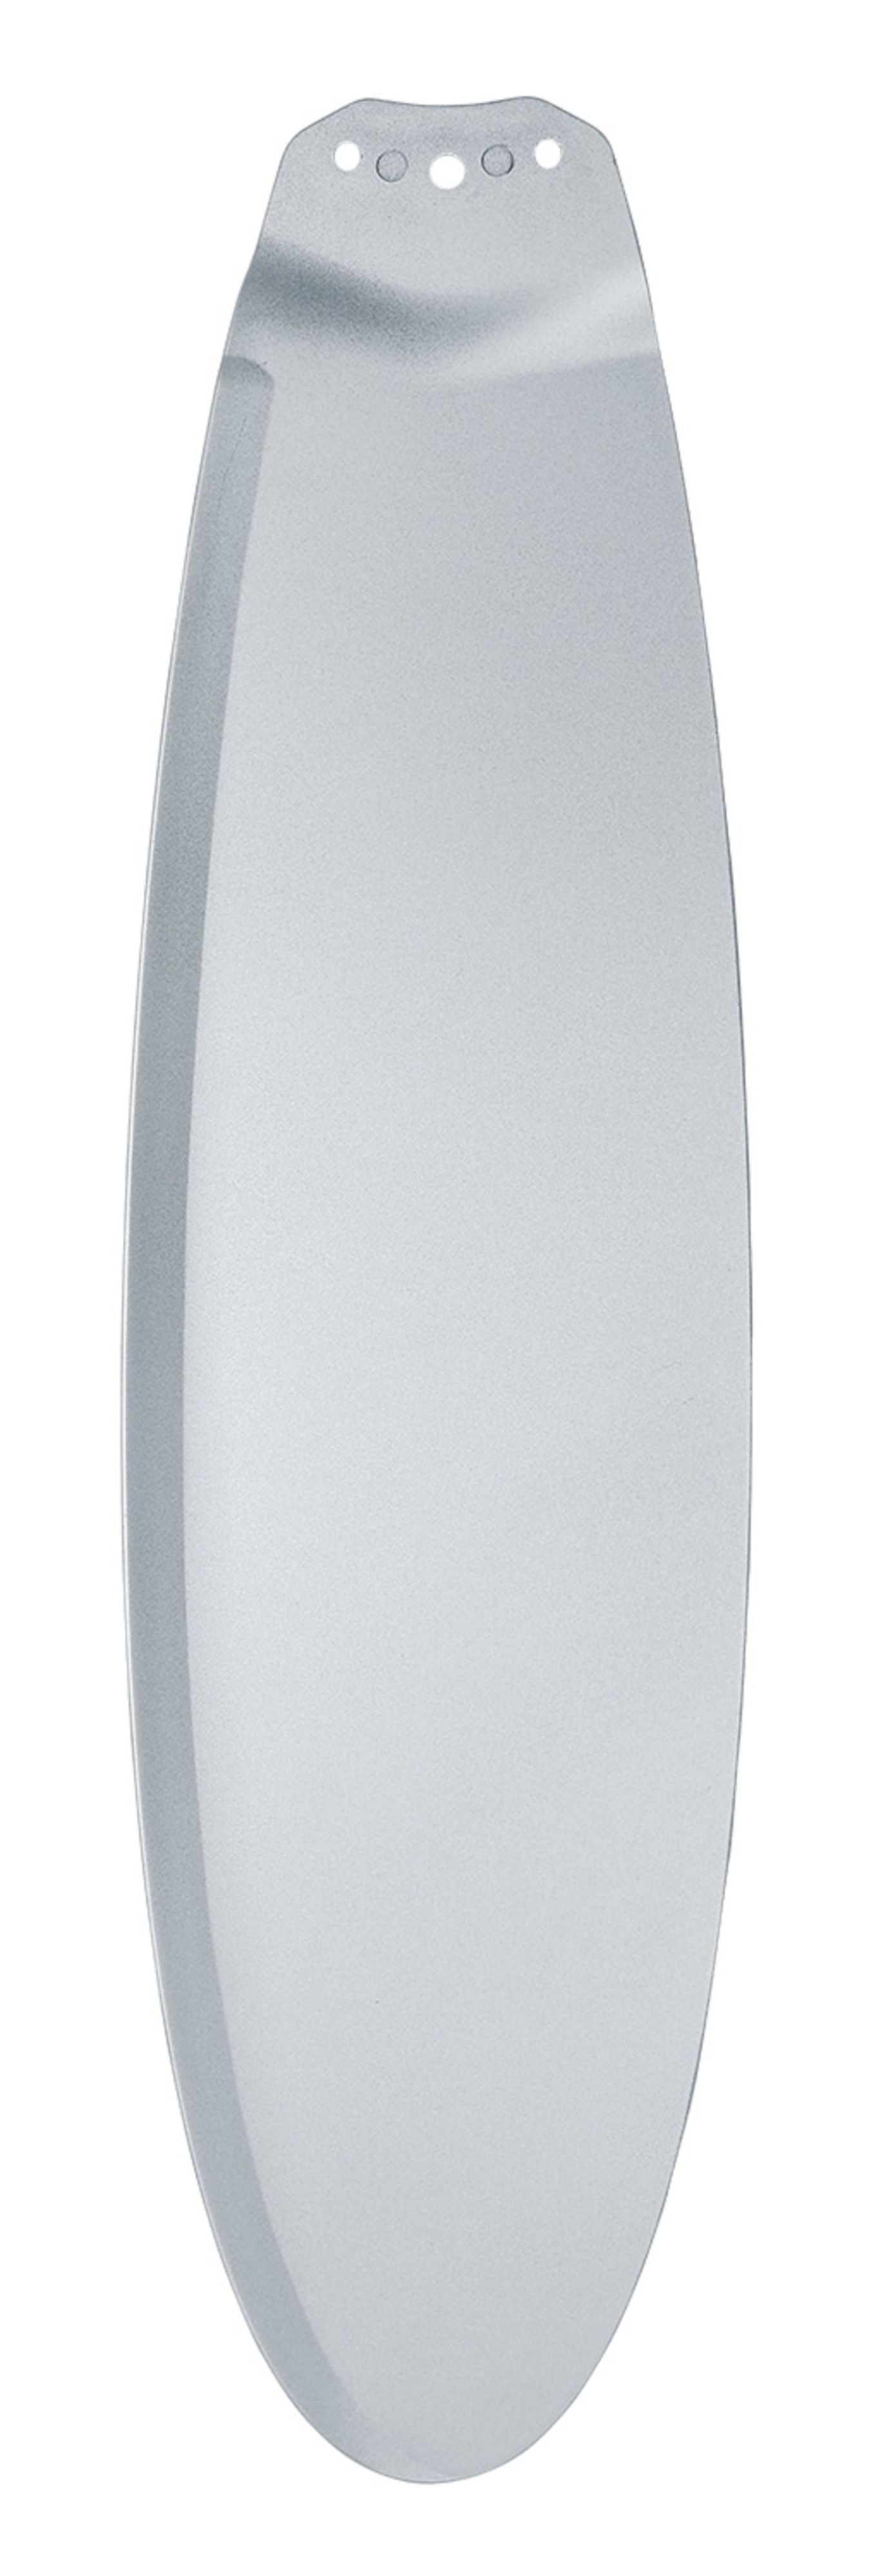 CASAFAN Eco Plano II (28 Silber Deckenventilator LED / Watt) Grau